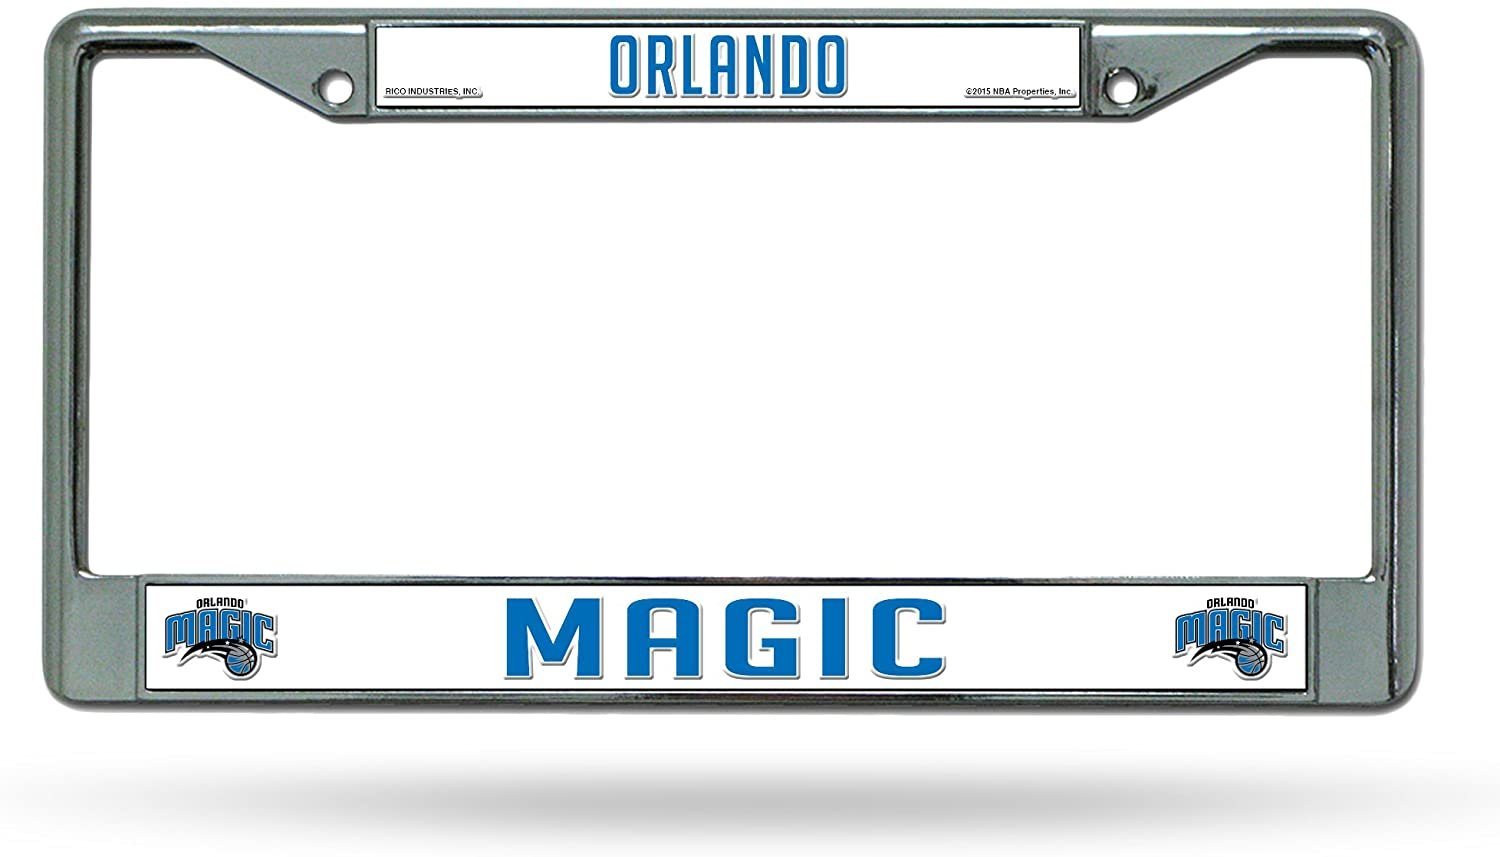 Orlando Magic Metal Chrome License Plate Frame Tag Cover 12x6 Inch